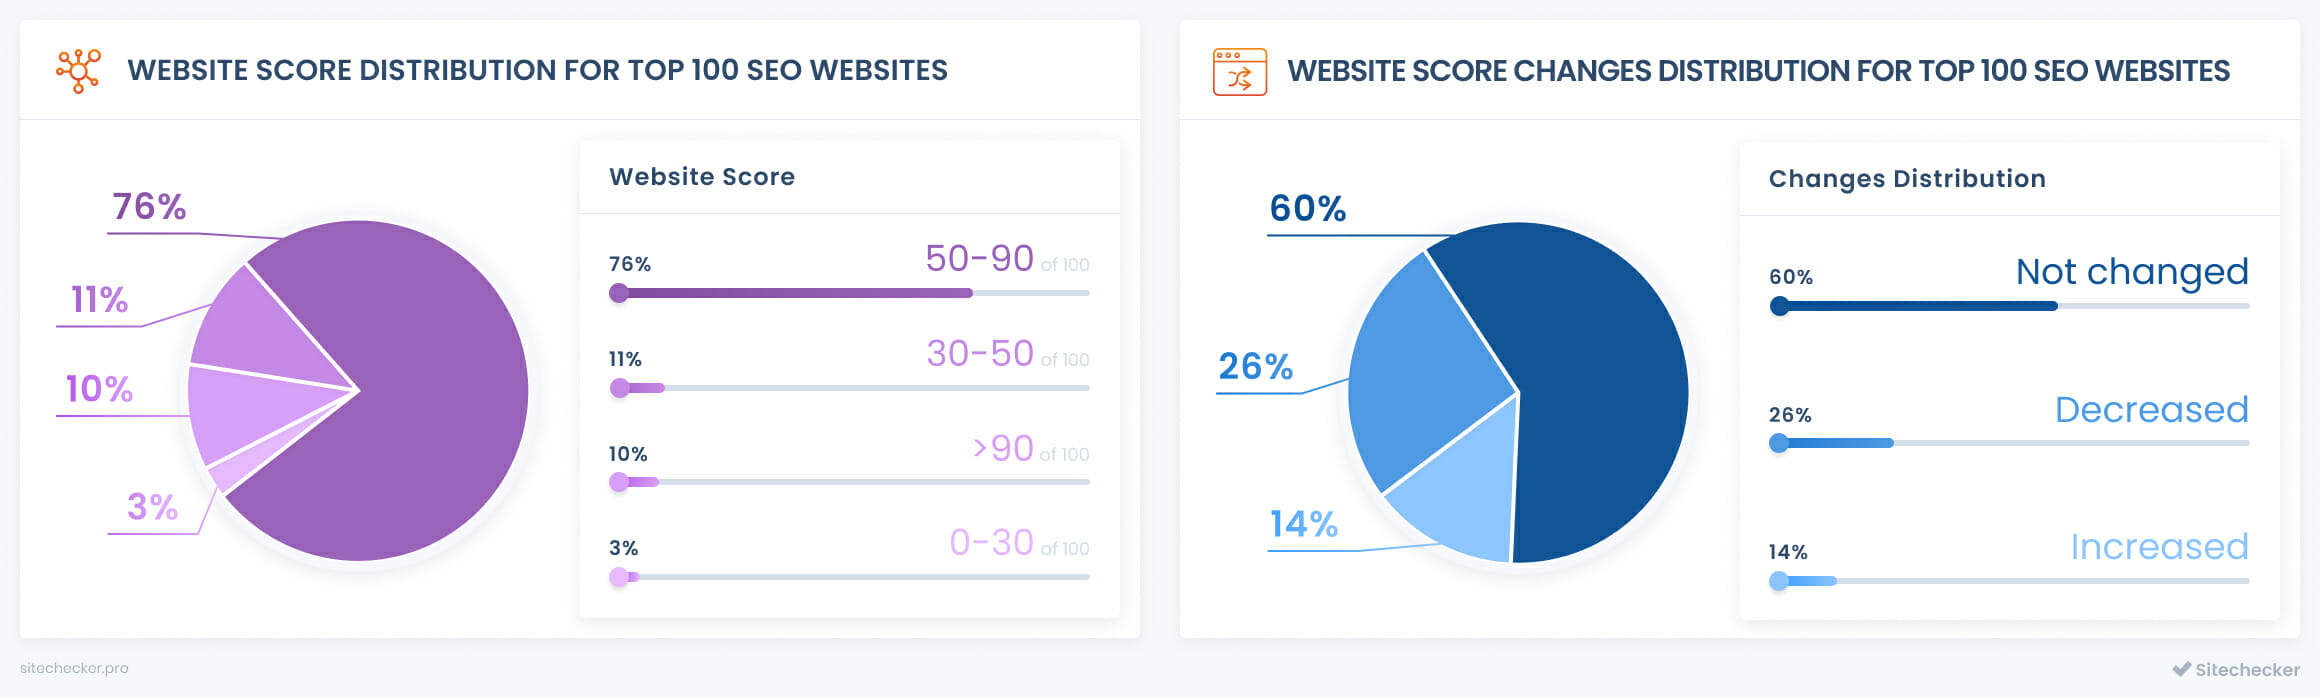 top seo companies website score distribution